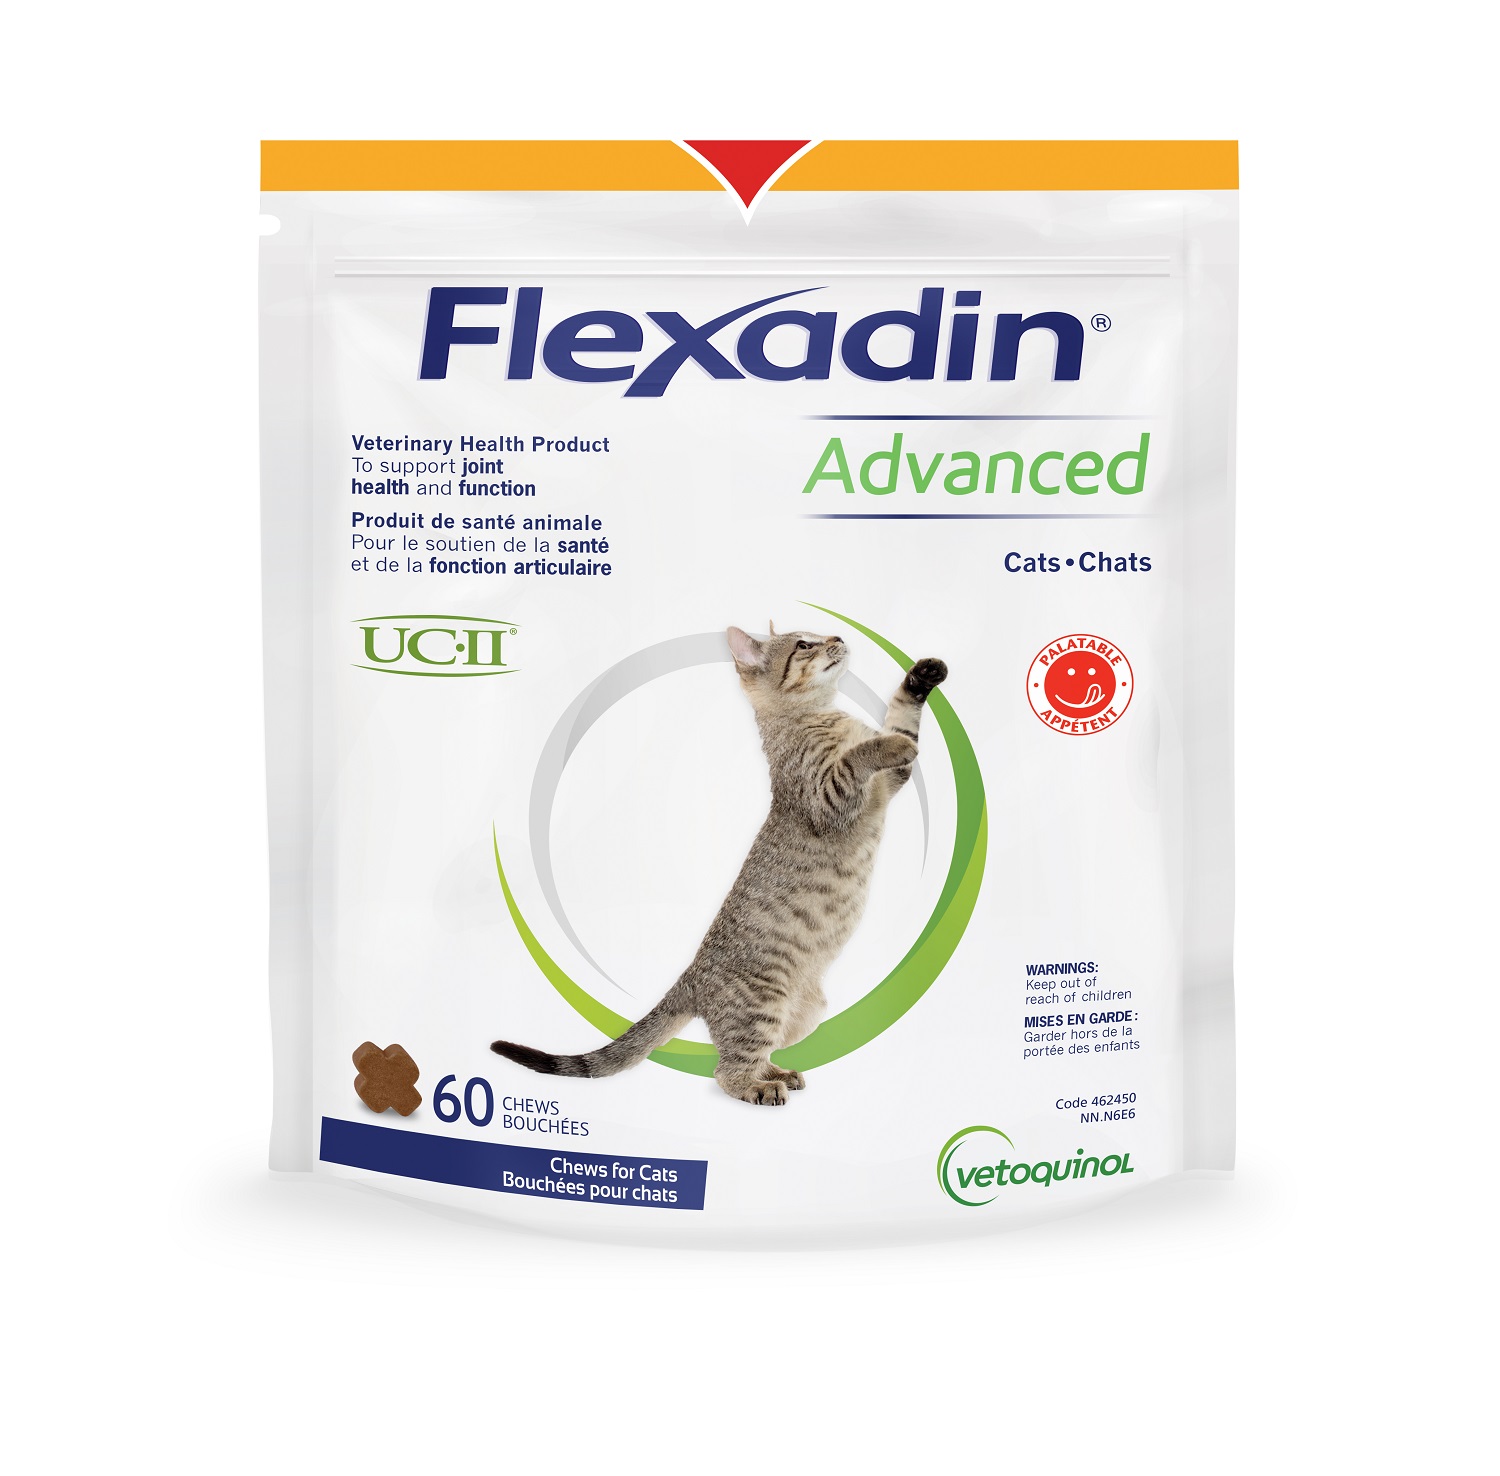 Flexadin Advanced for Cats